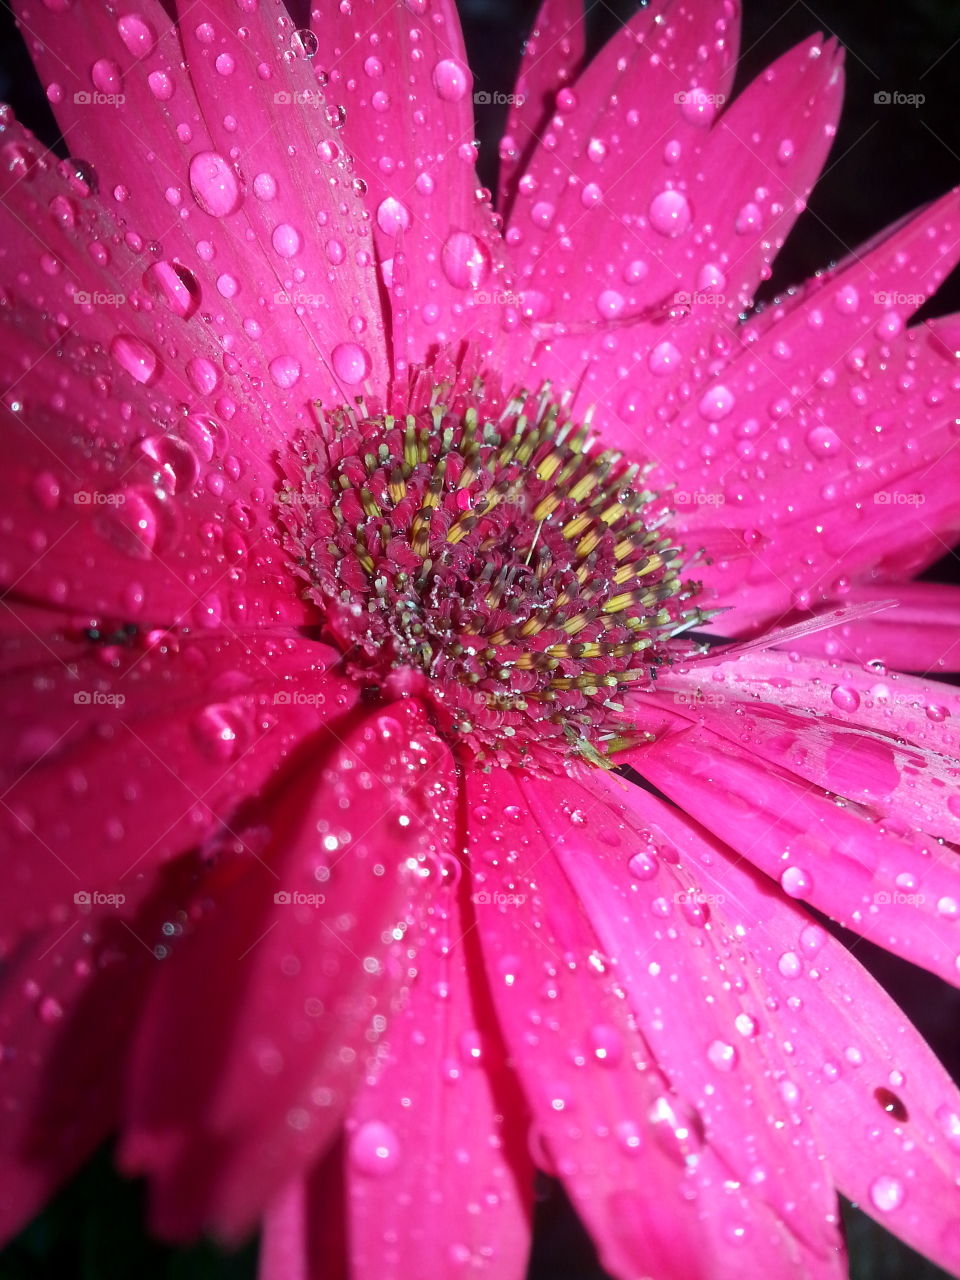 Waterdrop on pink flower